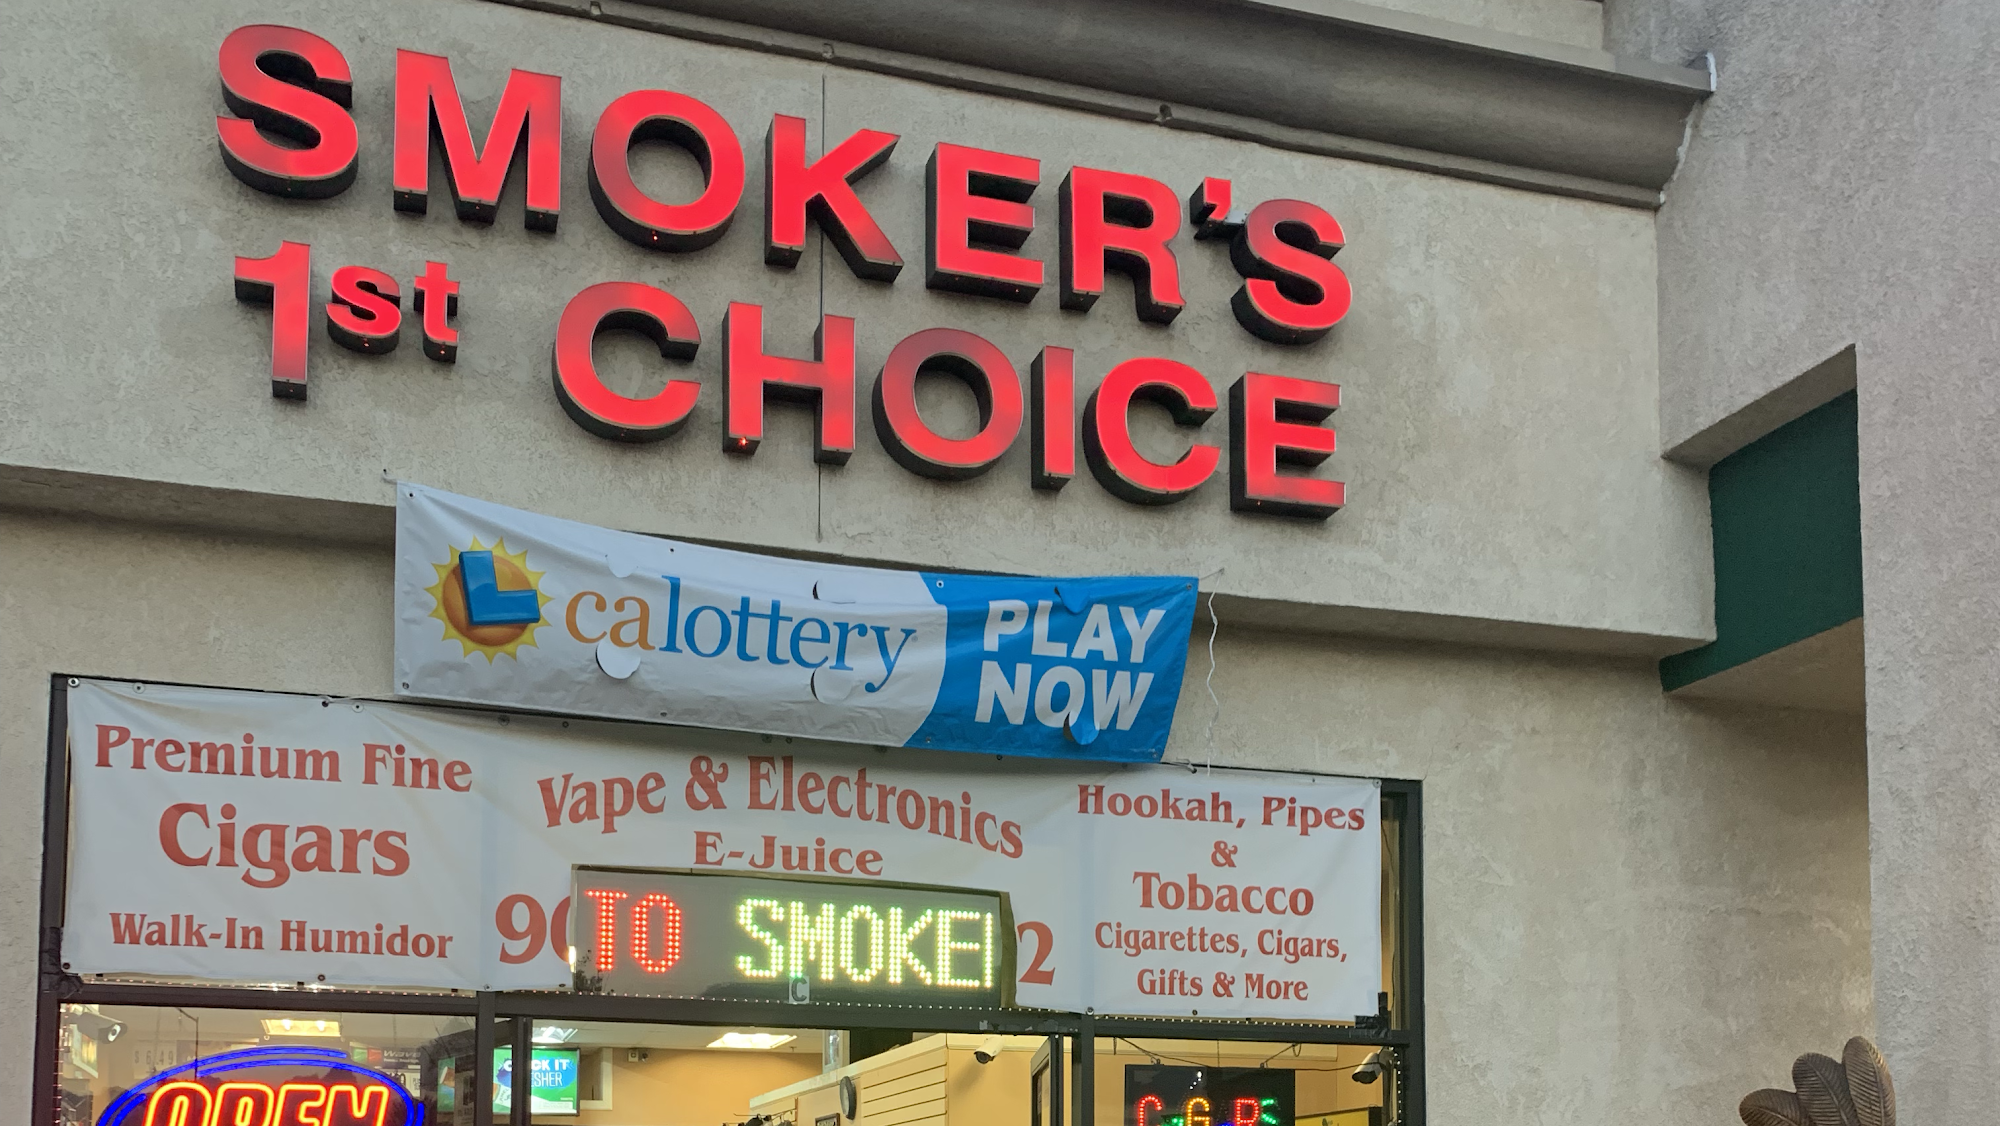 Smokers 1st Choice